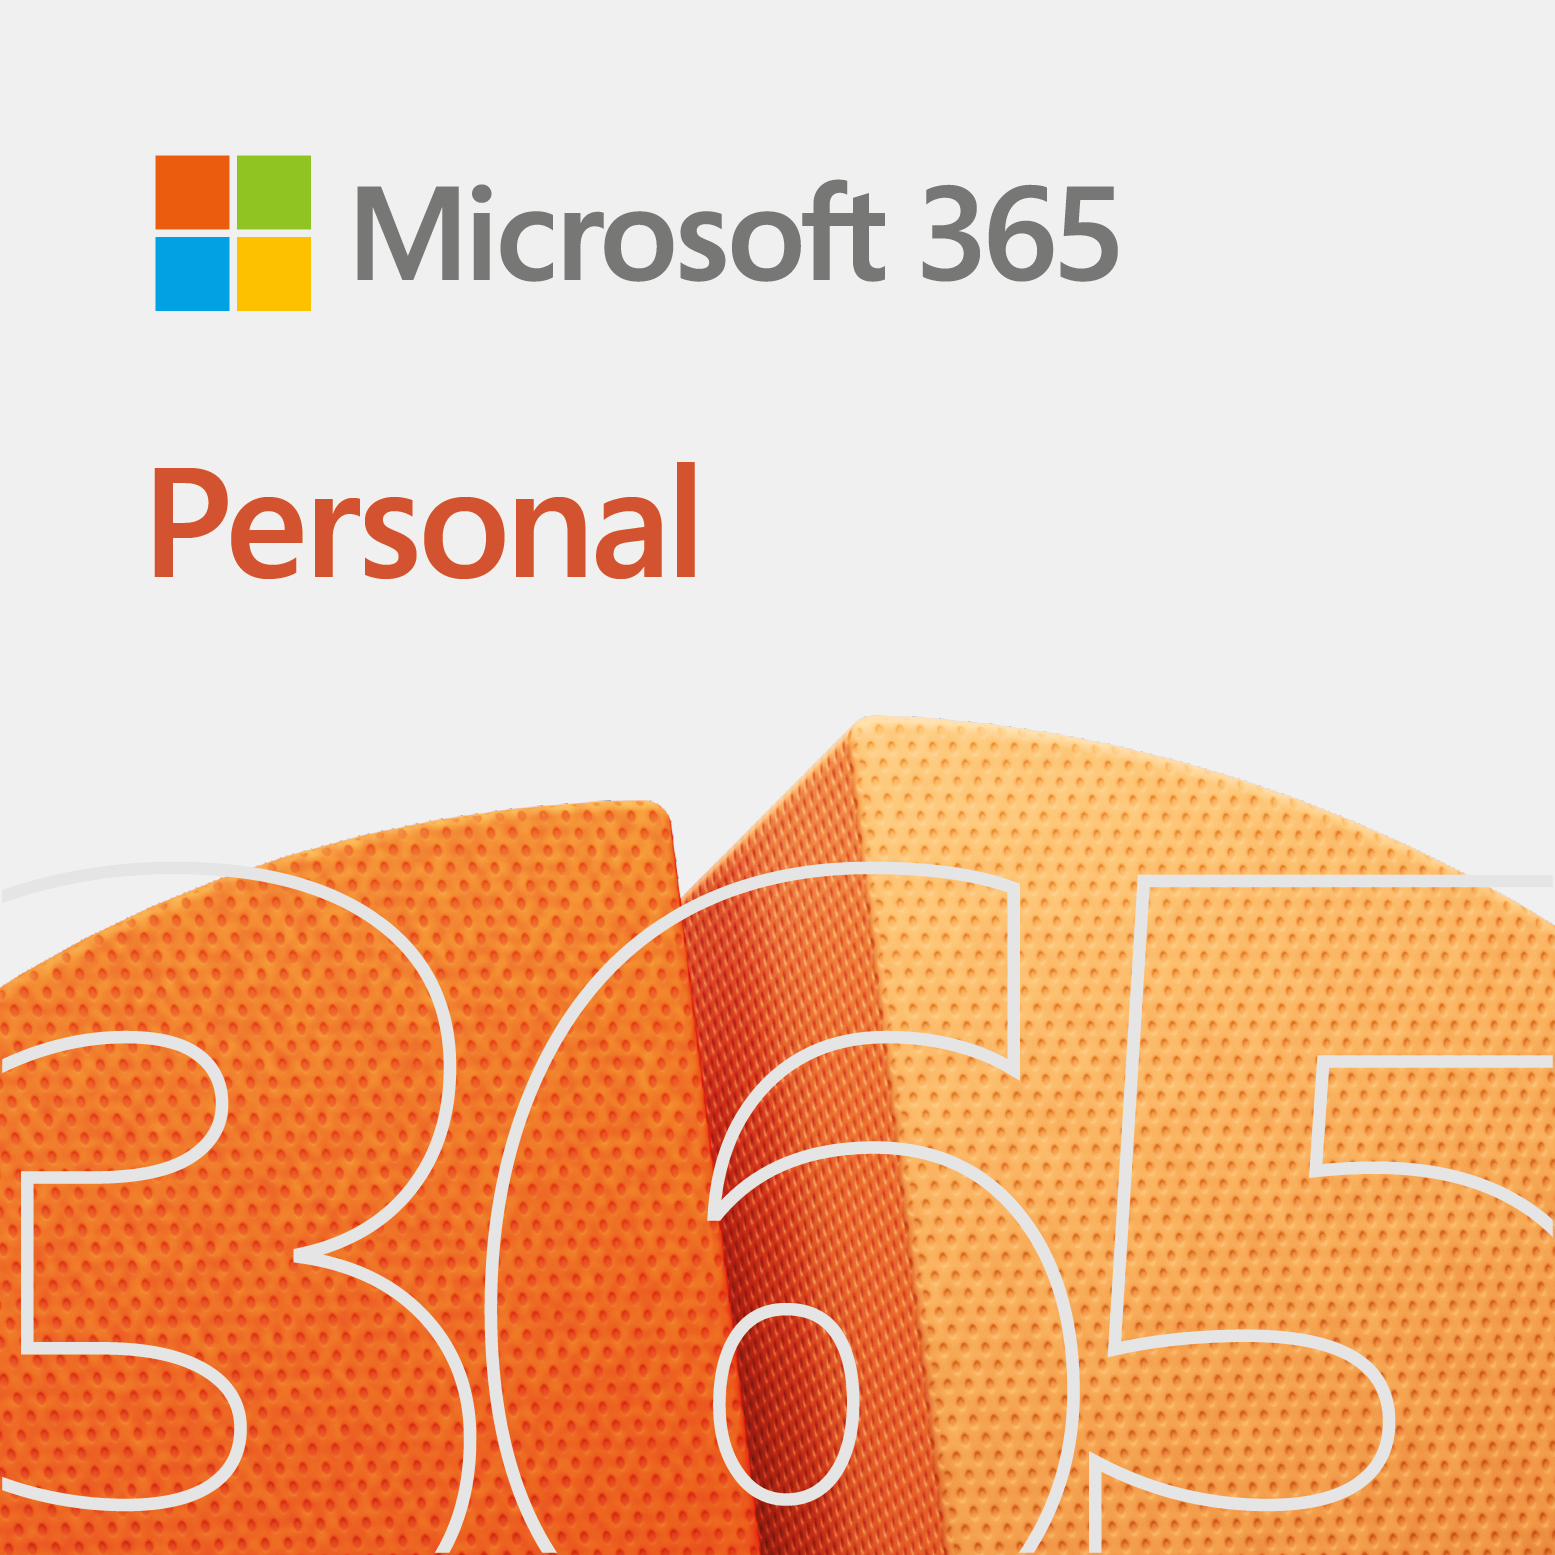 Microsoft 365 Personal (Yearly)